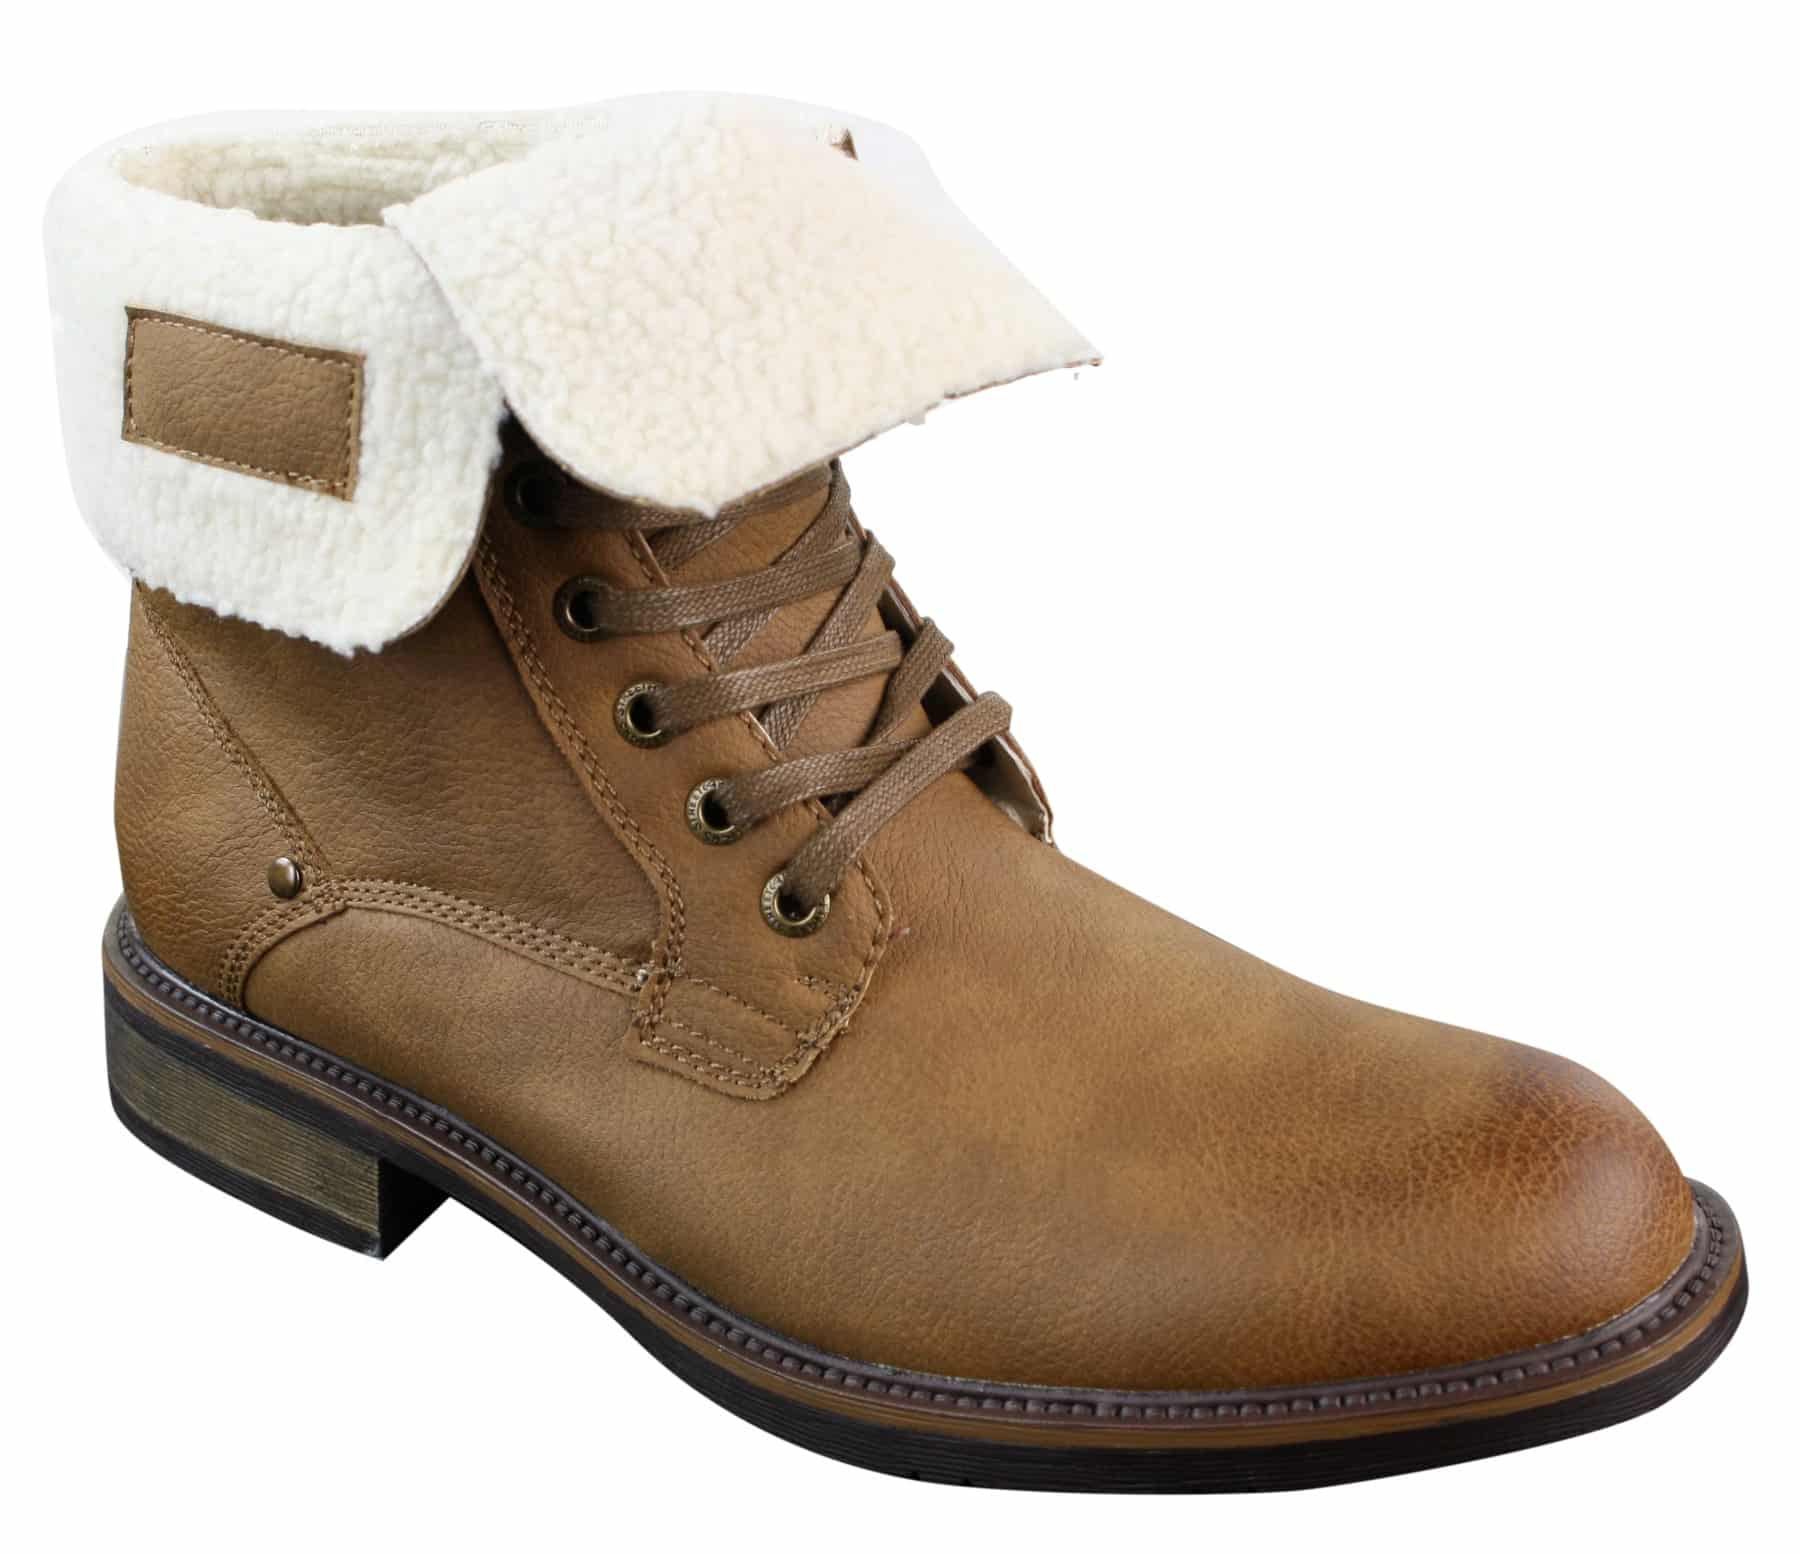 Mens Fleece Lined Boots on Sale | bellvalefarms.com